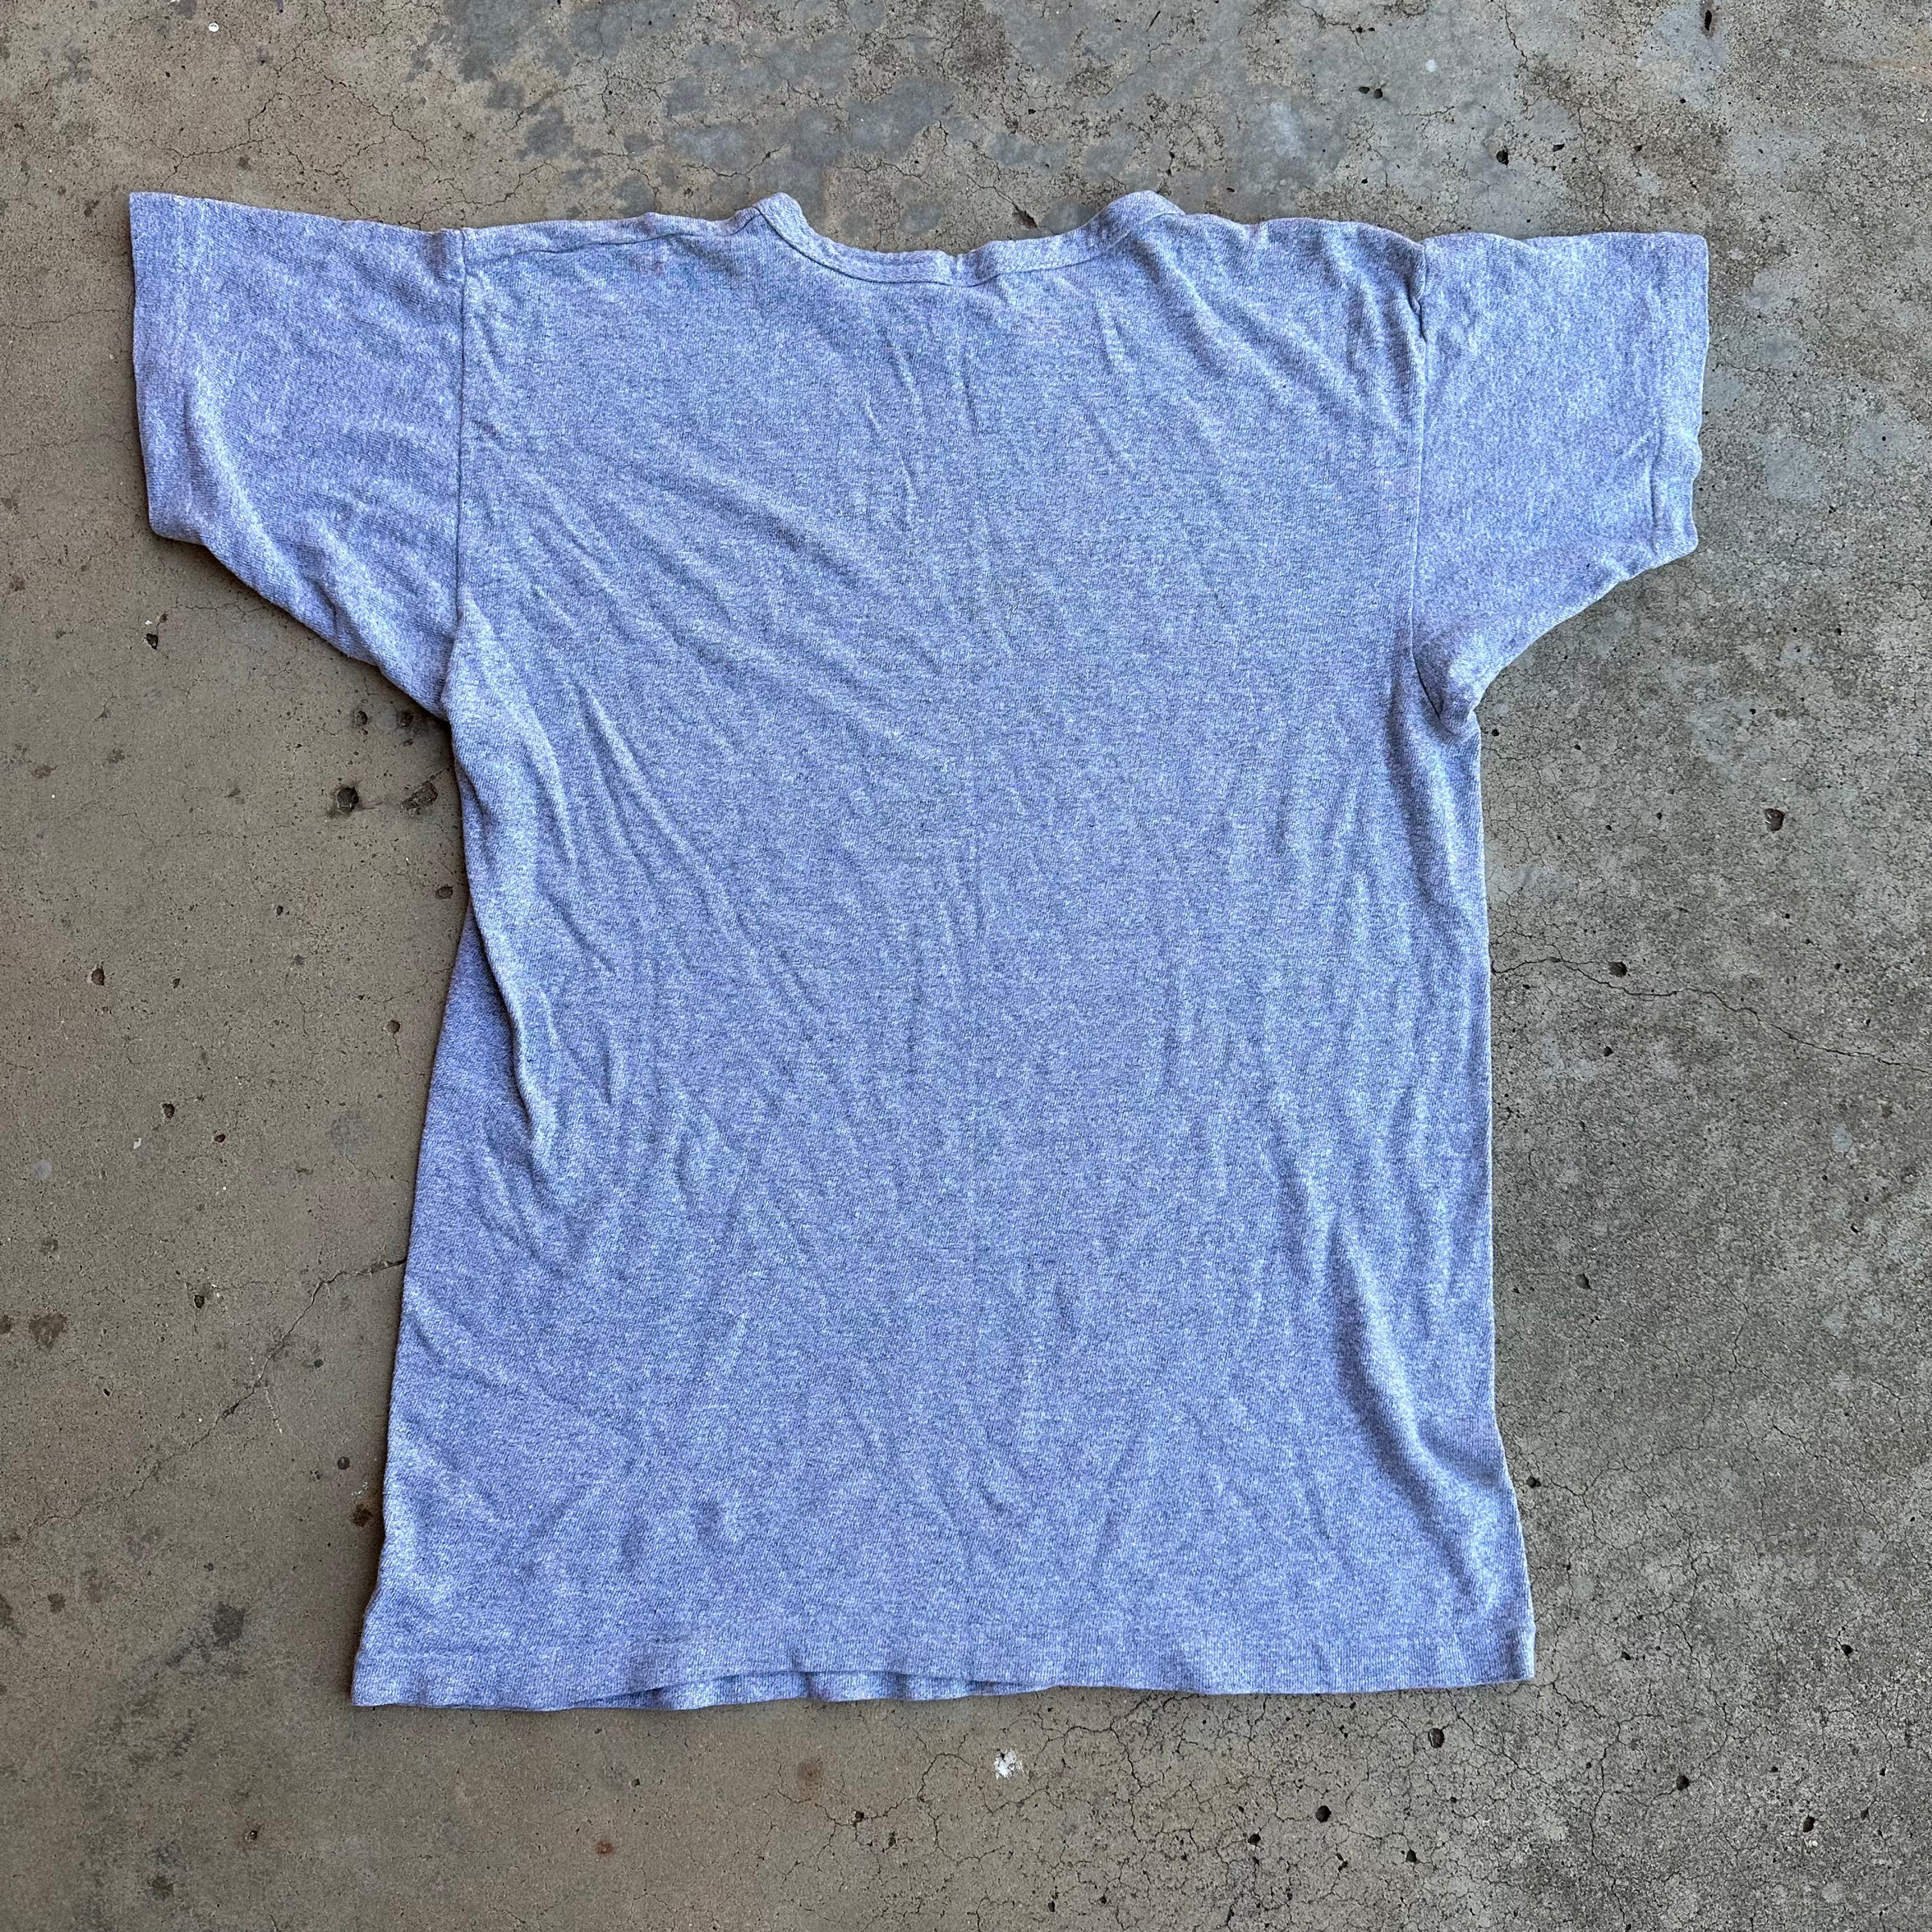 1970’s University of Virginia 88/12 Blend Champion Blue Bar T-Shirt Medium